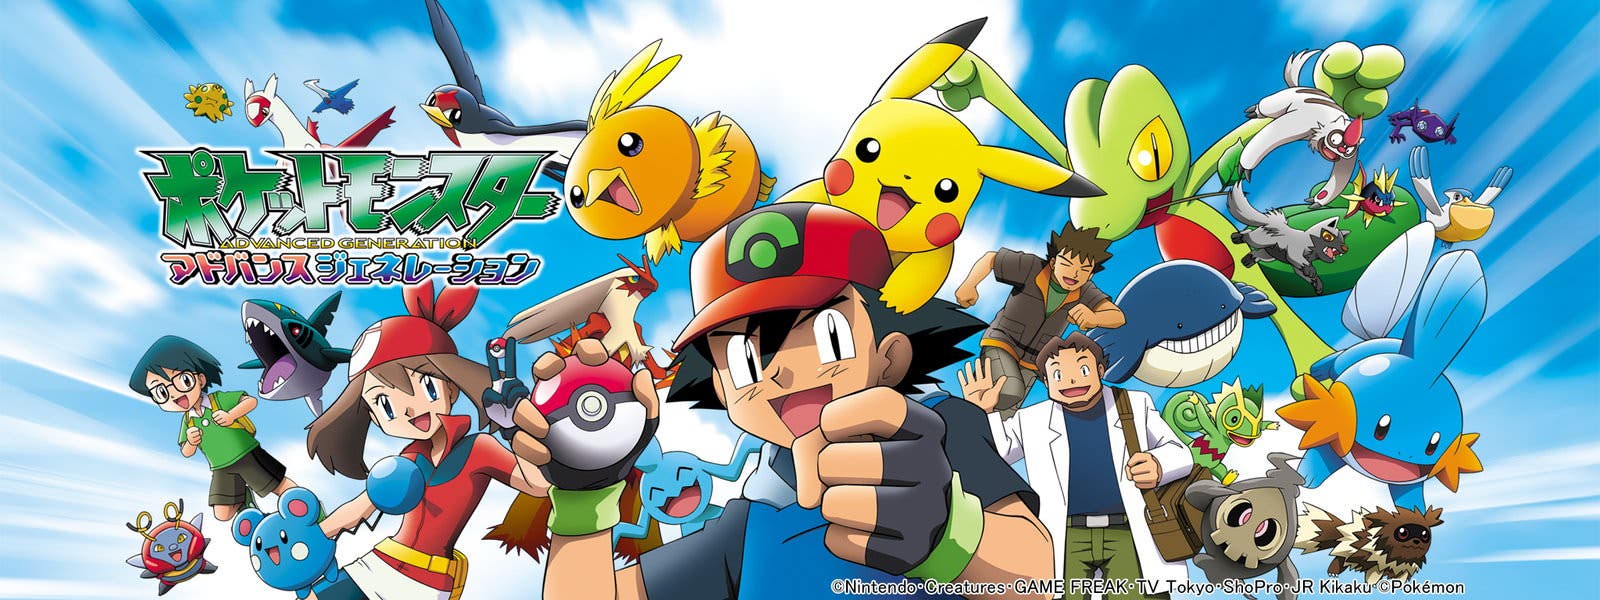 ‘Pokémon Advanced’, la sexta temporada del anime Pokémon, llegará en DVD a Norteamérica